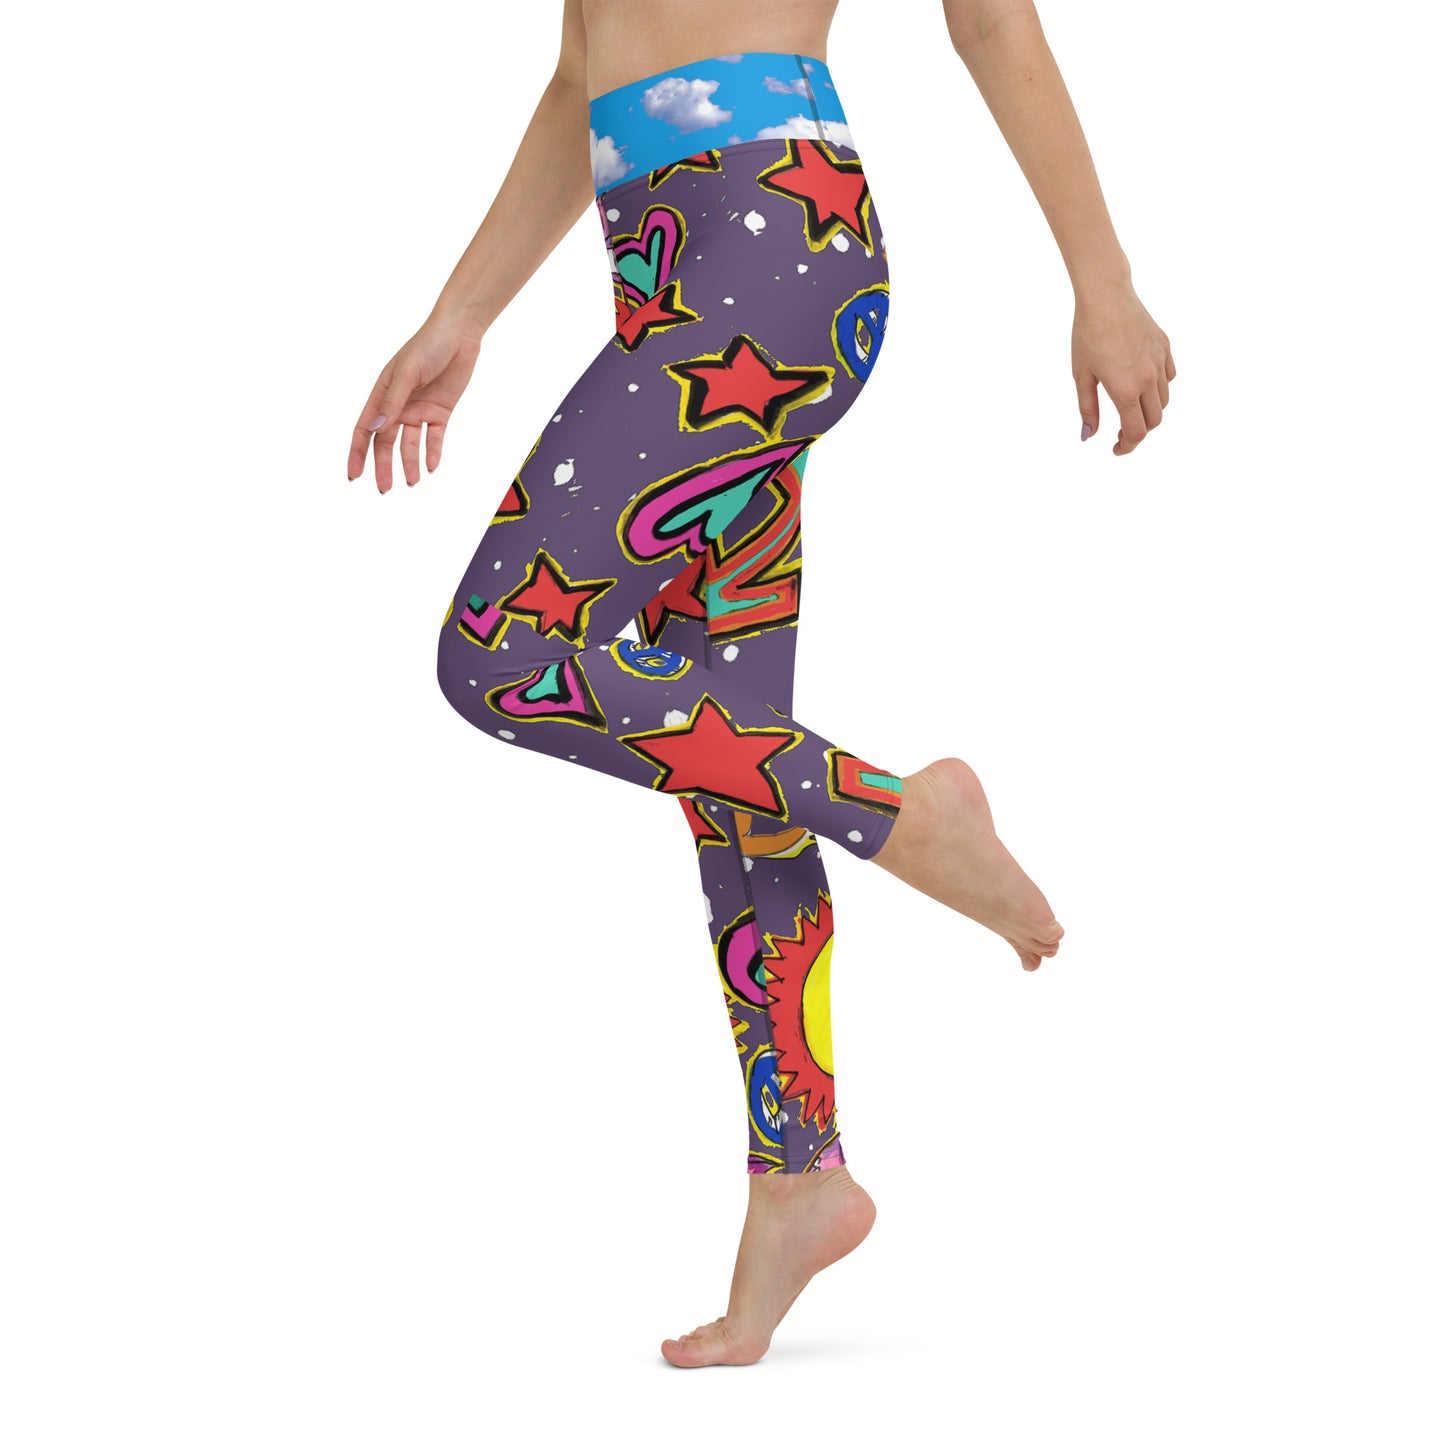 Gorky #DATASS Yoga Pants MPLS 83 Dream Edition